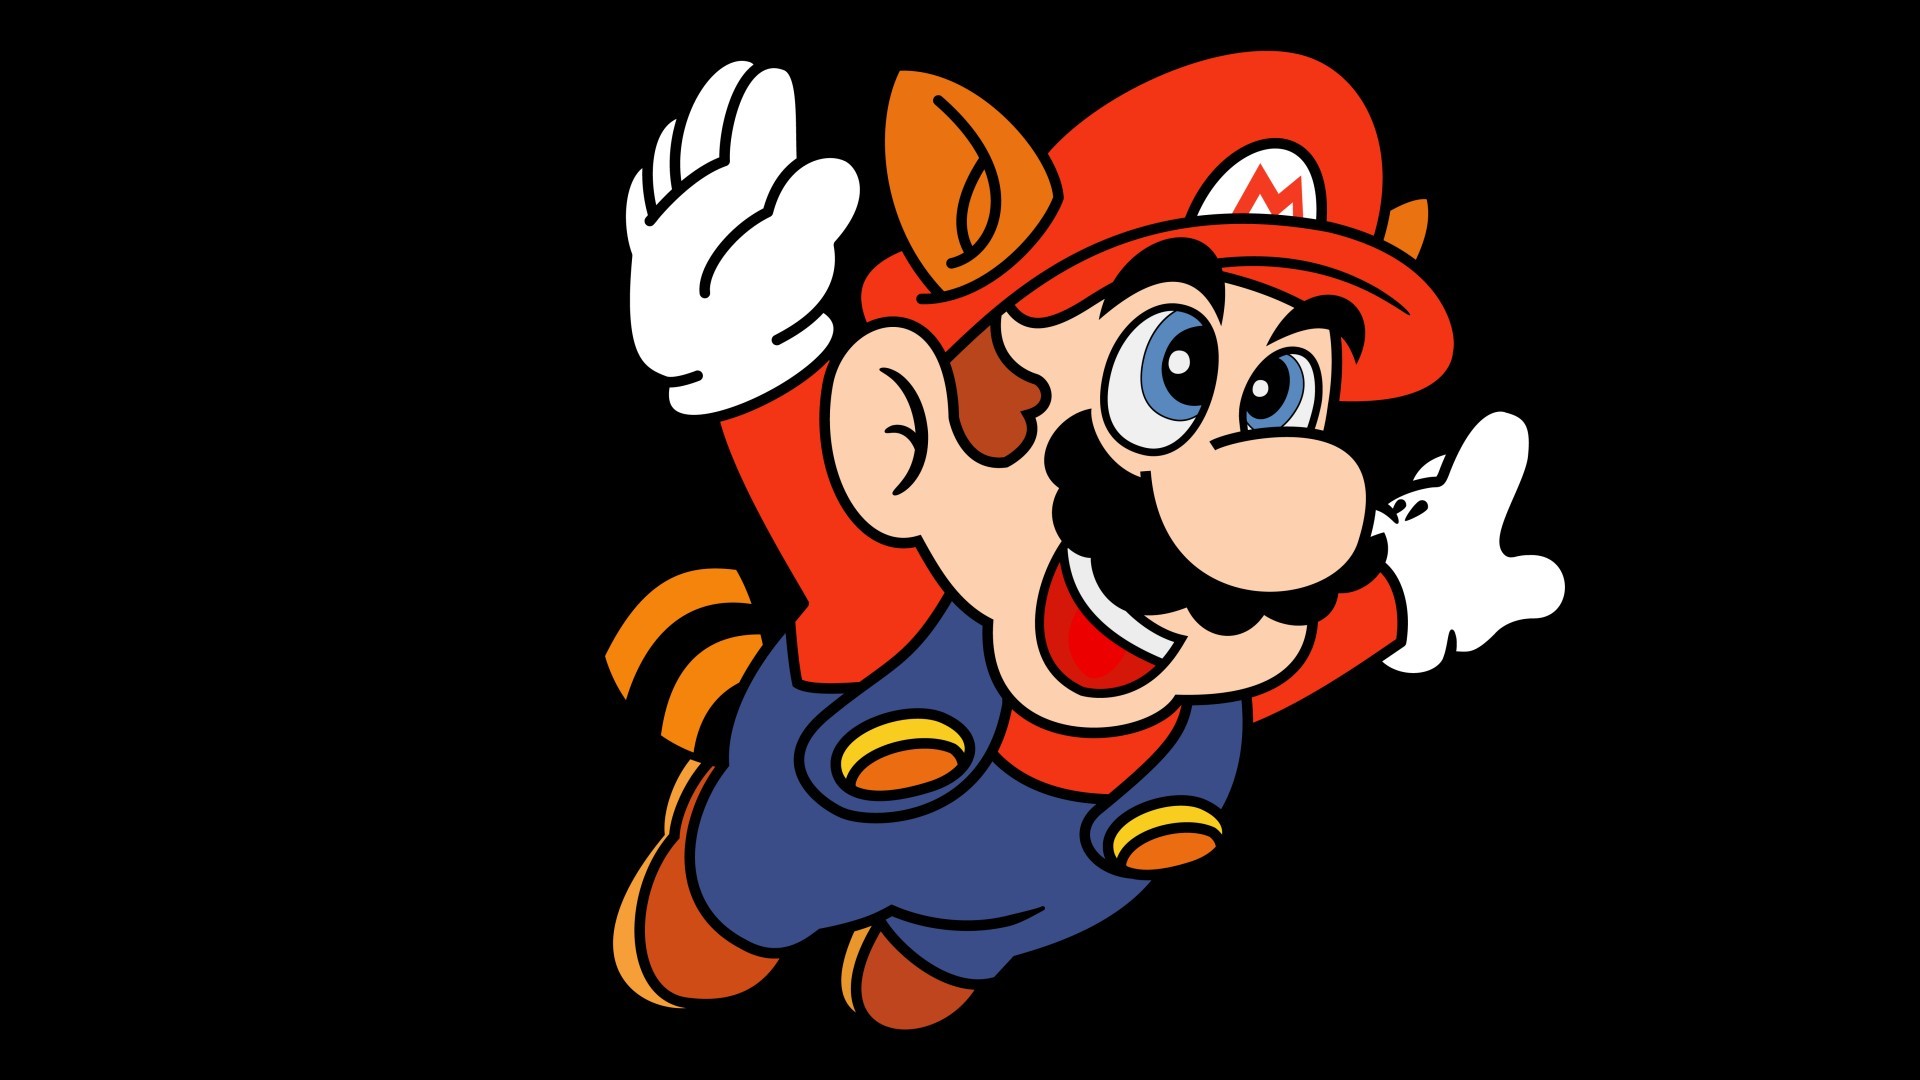 1920x1080 Super Mario Advance 4 - Super Mario Bros. 3 HD Wallpaper | Hintergrund |   | ID:516008 - Wallpaper Abyss